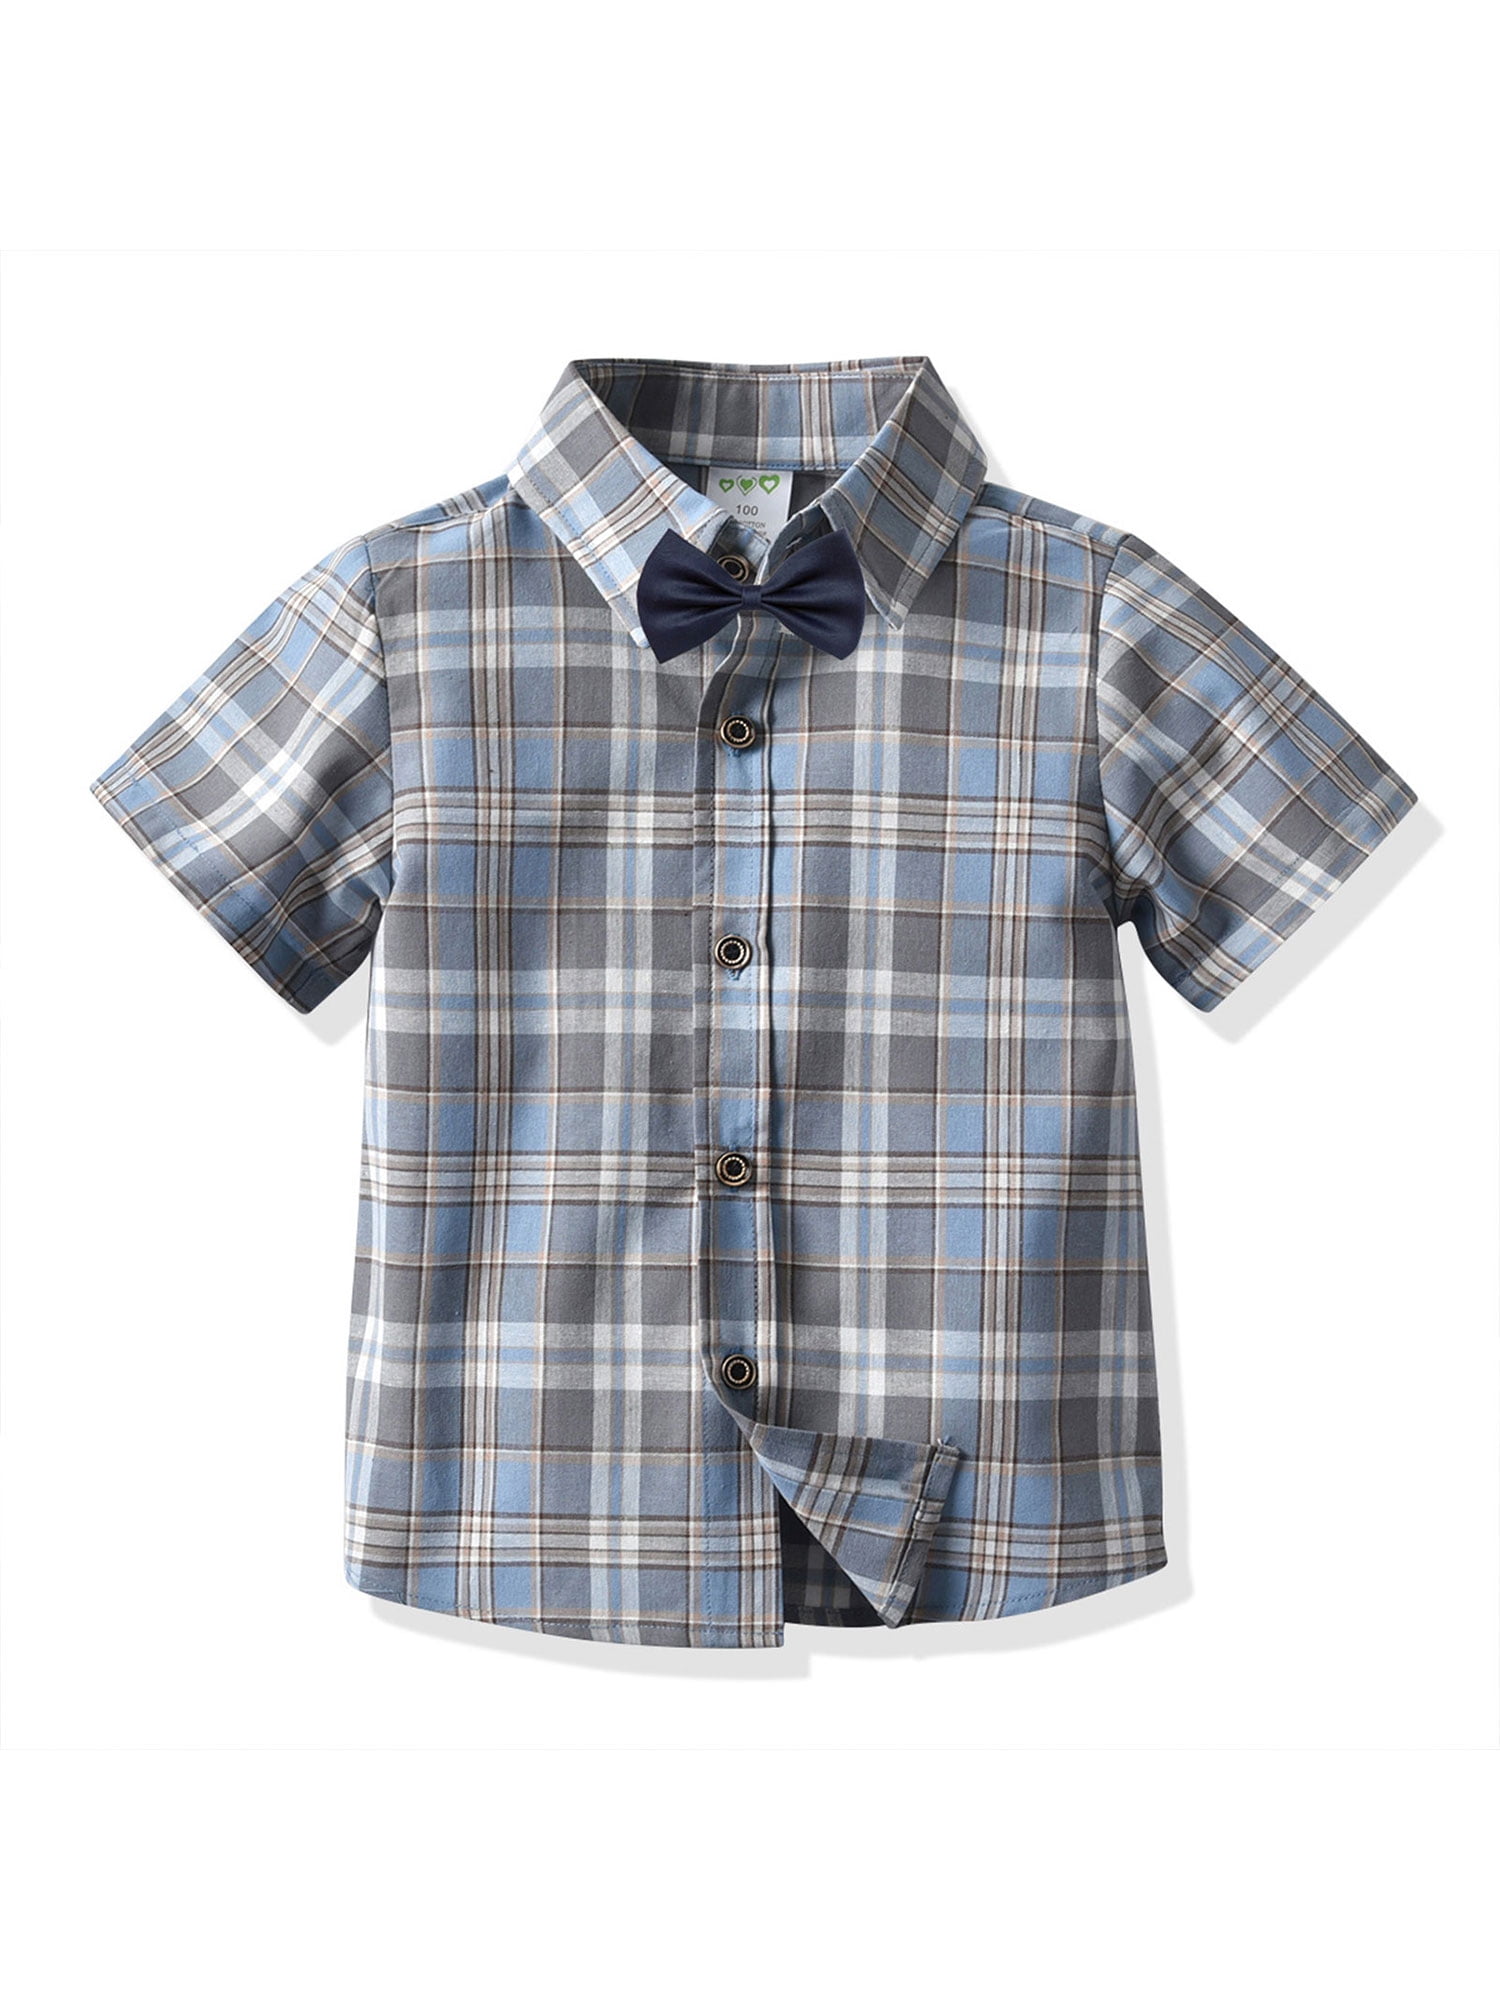 Blue Car, 18-24 Months Toddler Baby Boys Hawaiian Shirts Button Down Short Sleeve Striped Plaid Print Bow Tie Casual Tops T-Shirt 